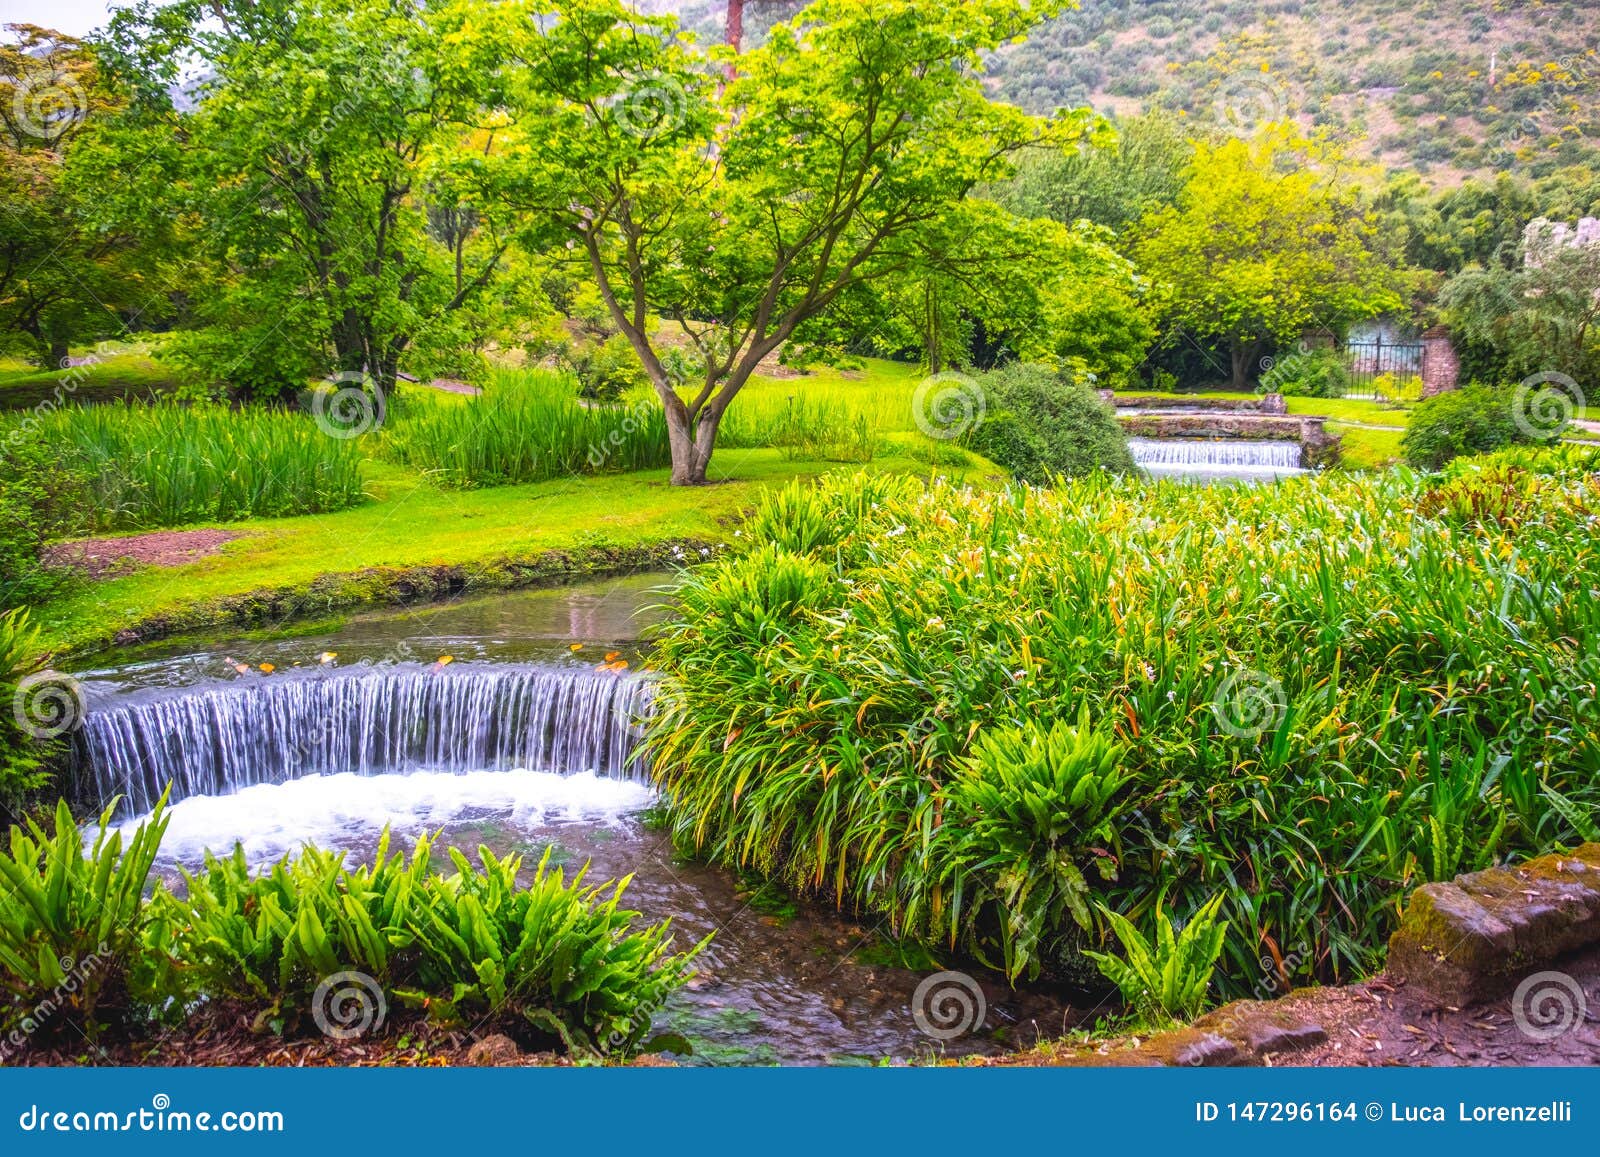 eden garden fairytale waterfall fountain in the giardino di ninfa - cisterna di latina - lazio - italy